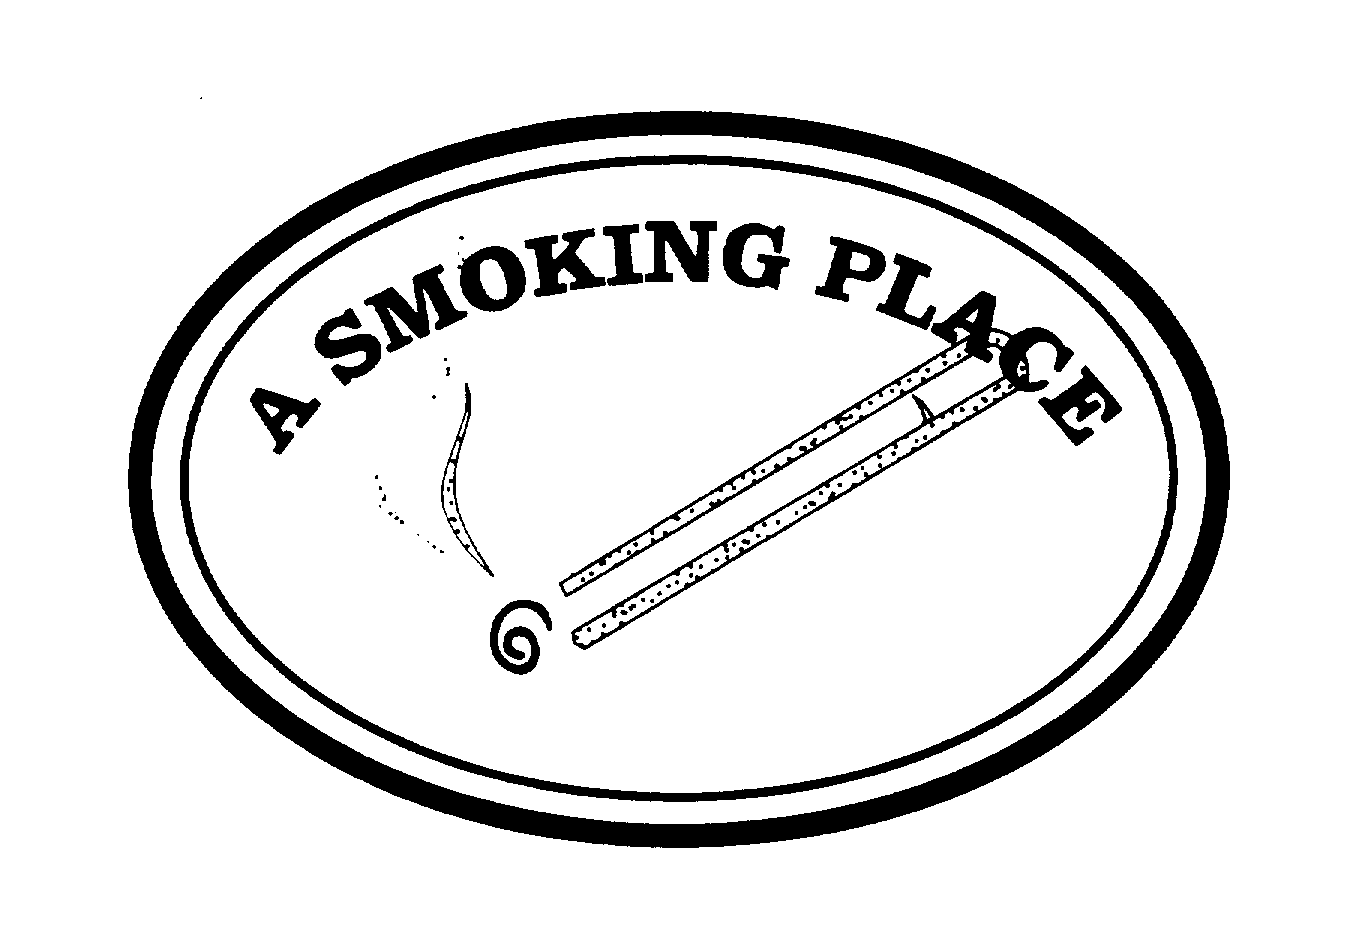  A SMOKING PLACE